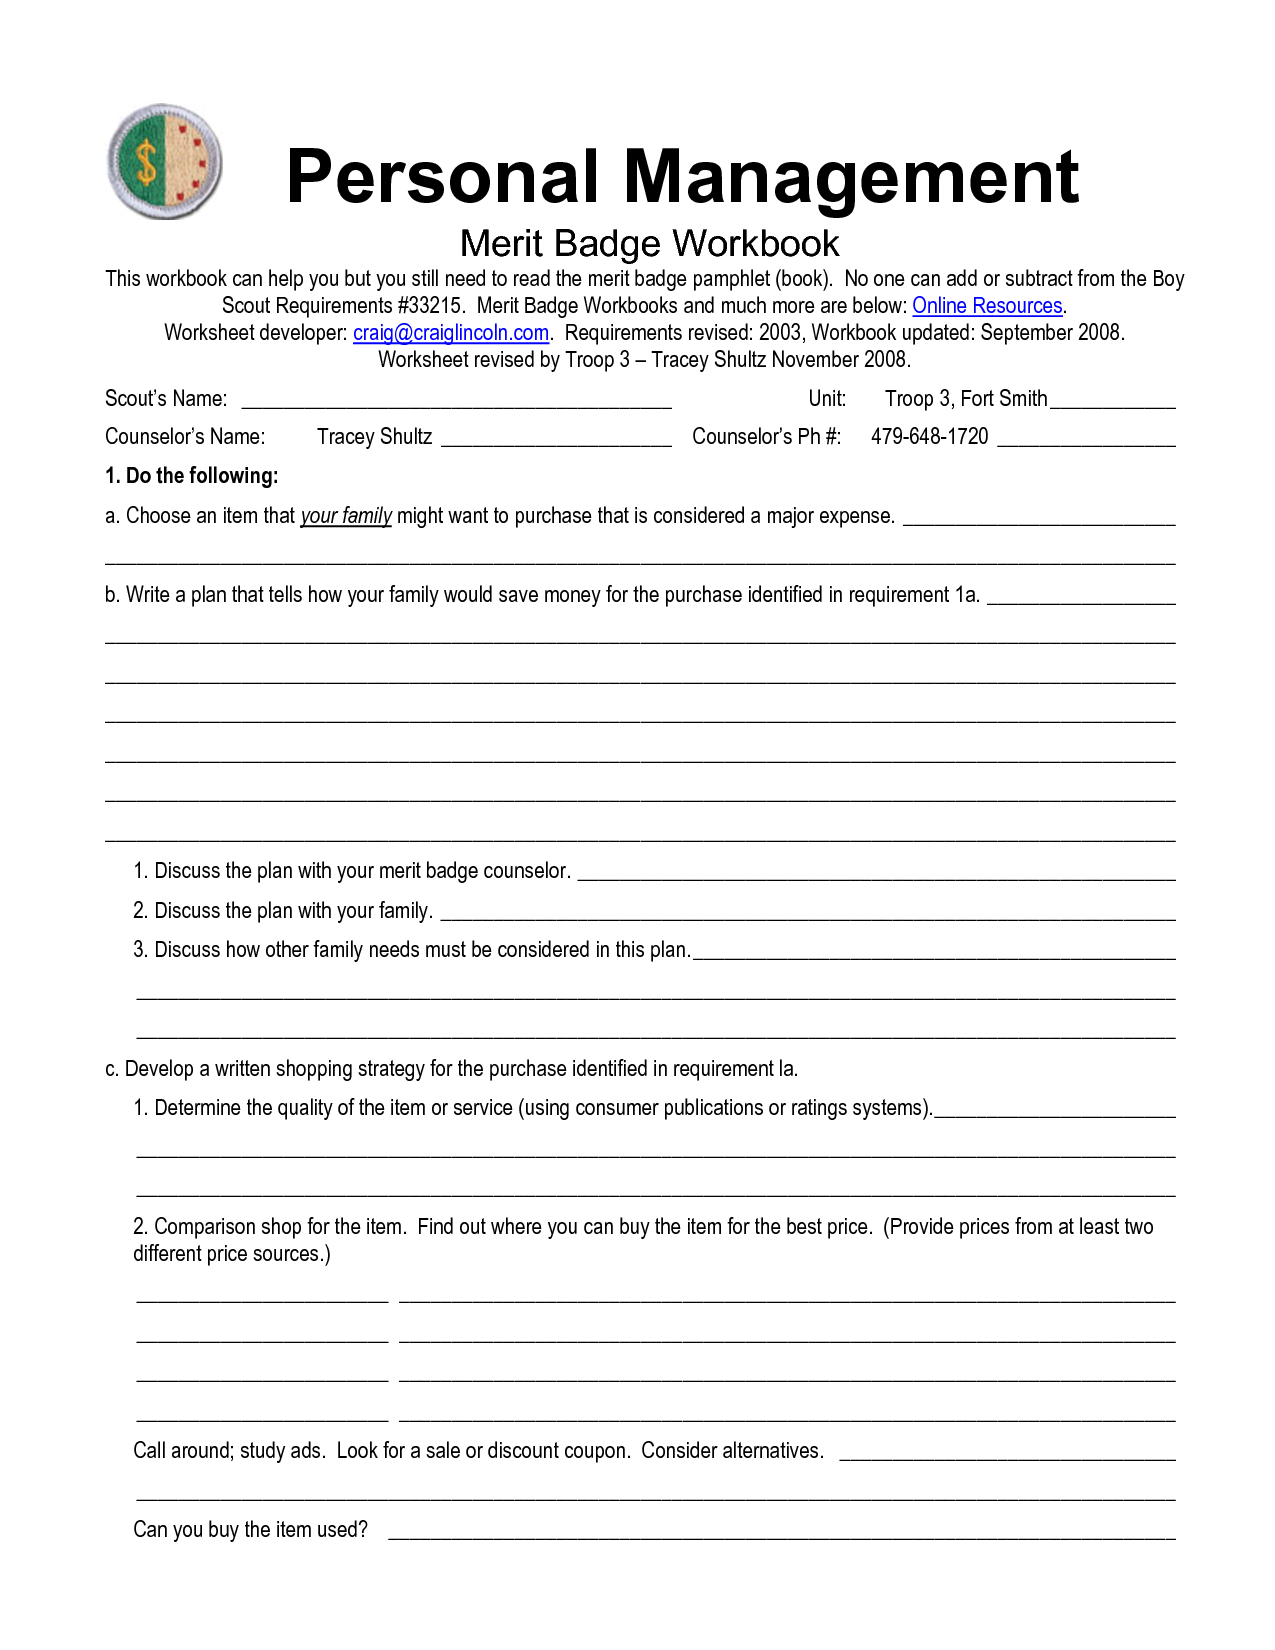 Personal Management Merit Badge Worksheet Answers